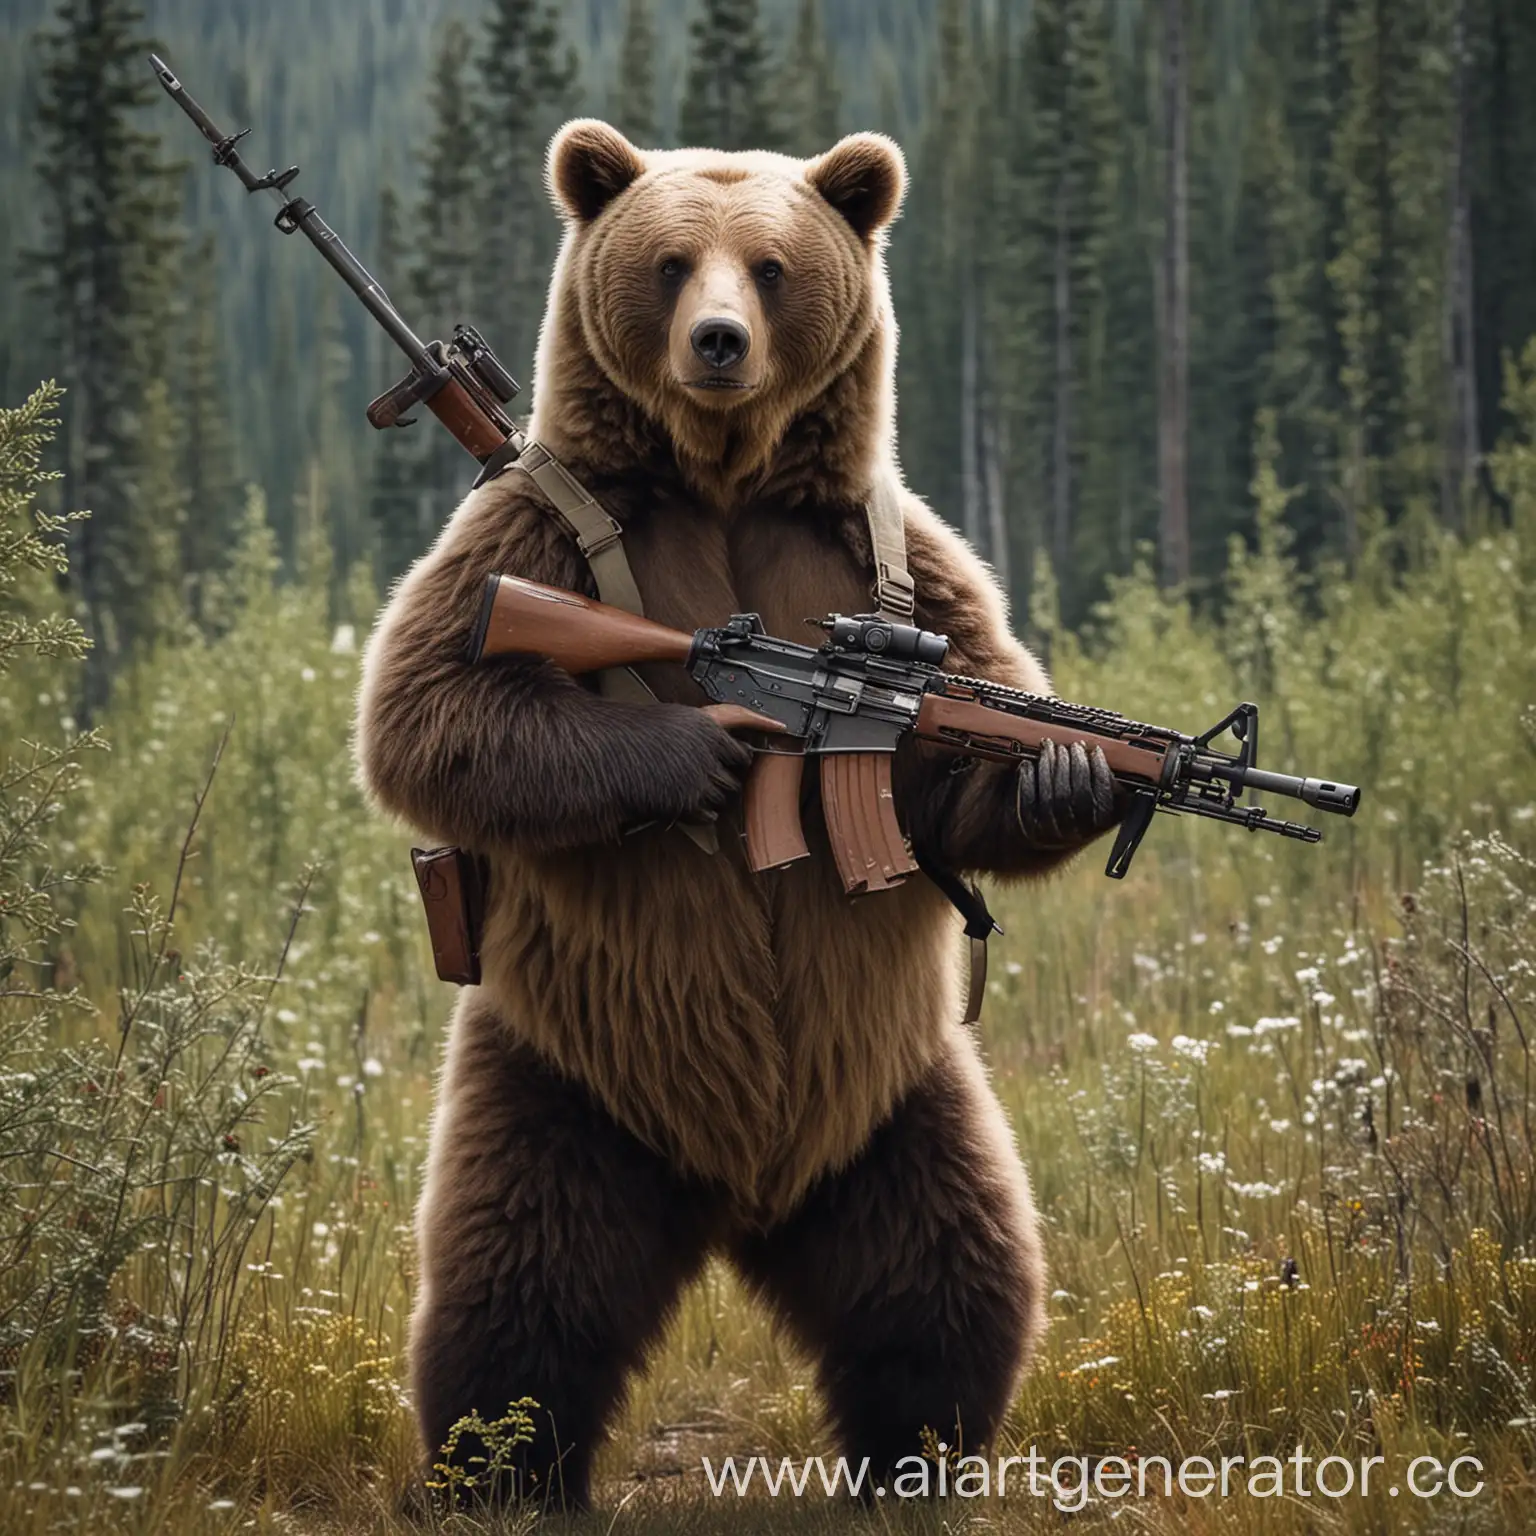 Wild-Bear-Holding-Rifle-in-Forest-Wilderness